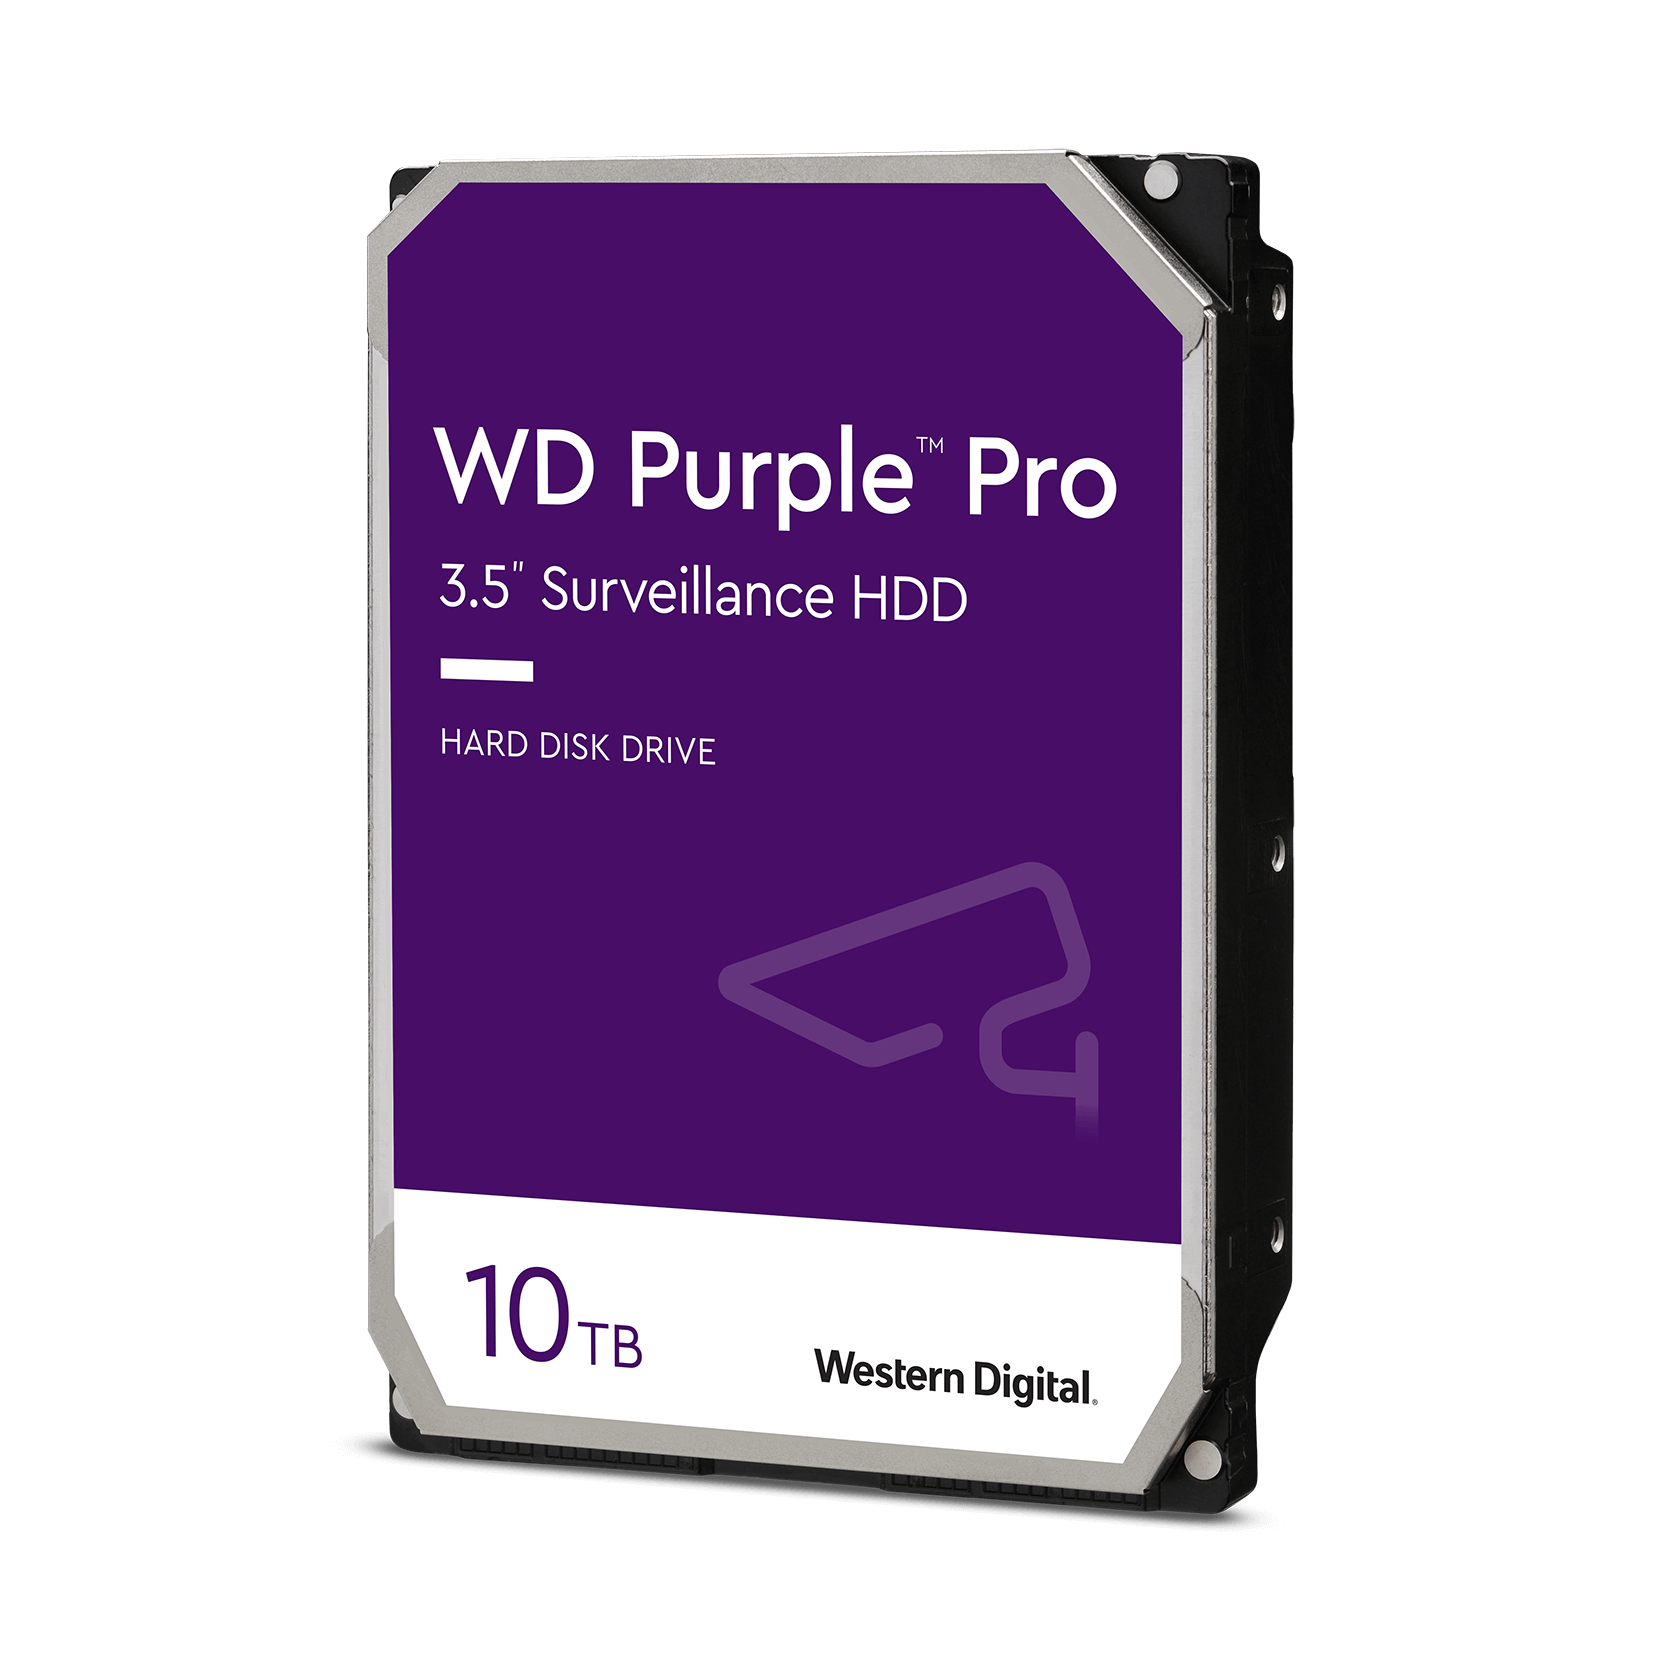 Western Digital 10TB WD Pro - Surveillance, Purple, Storage System - WD101PURP